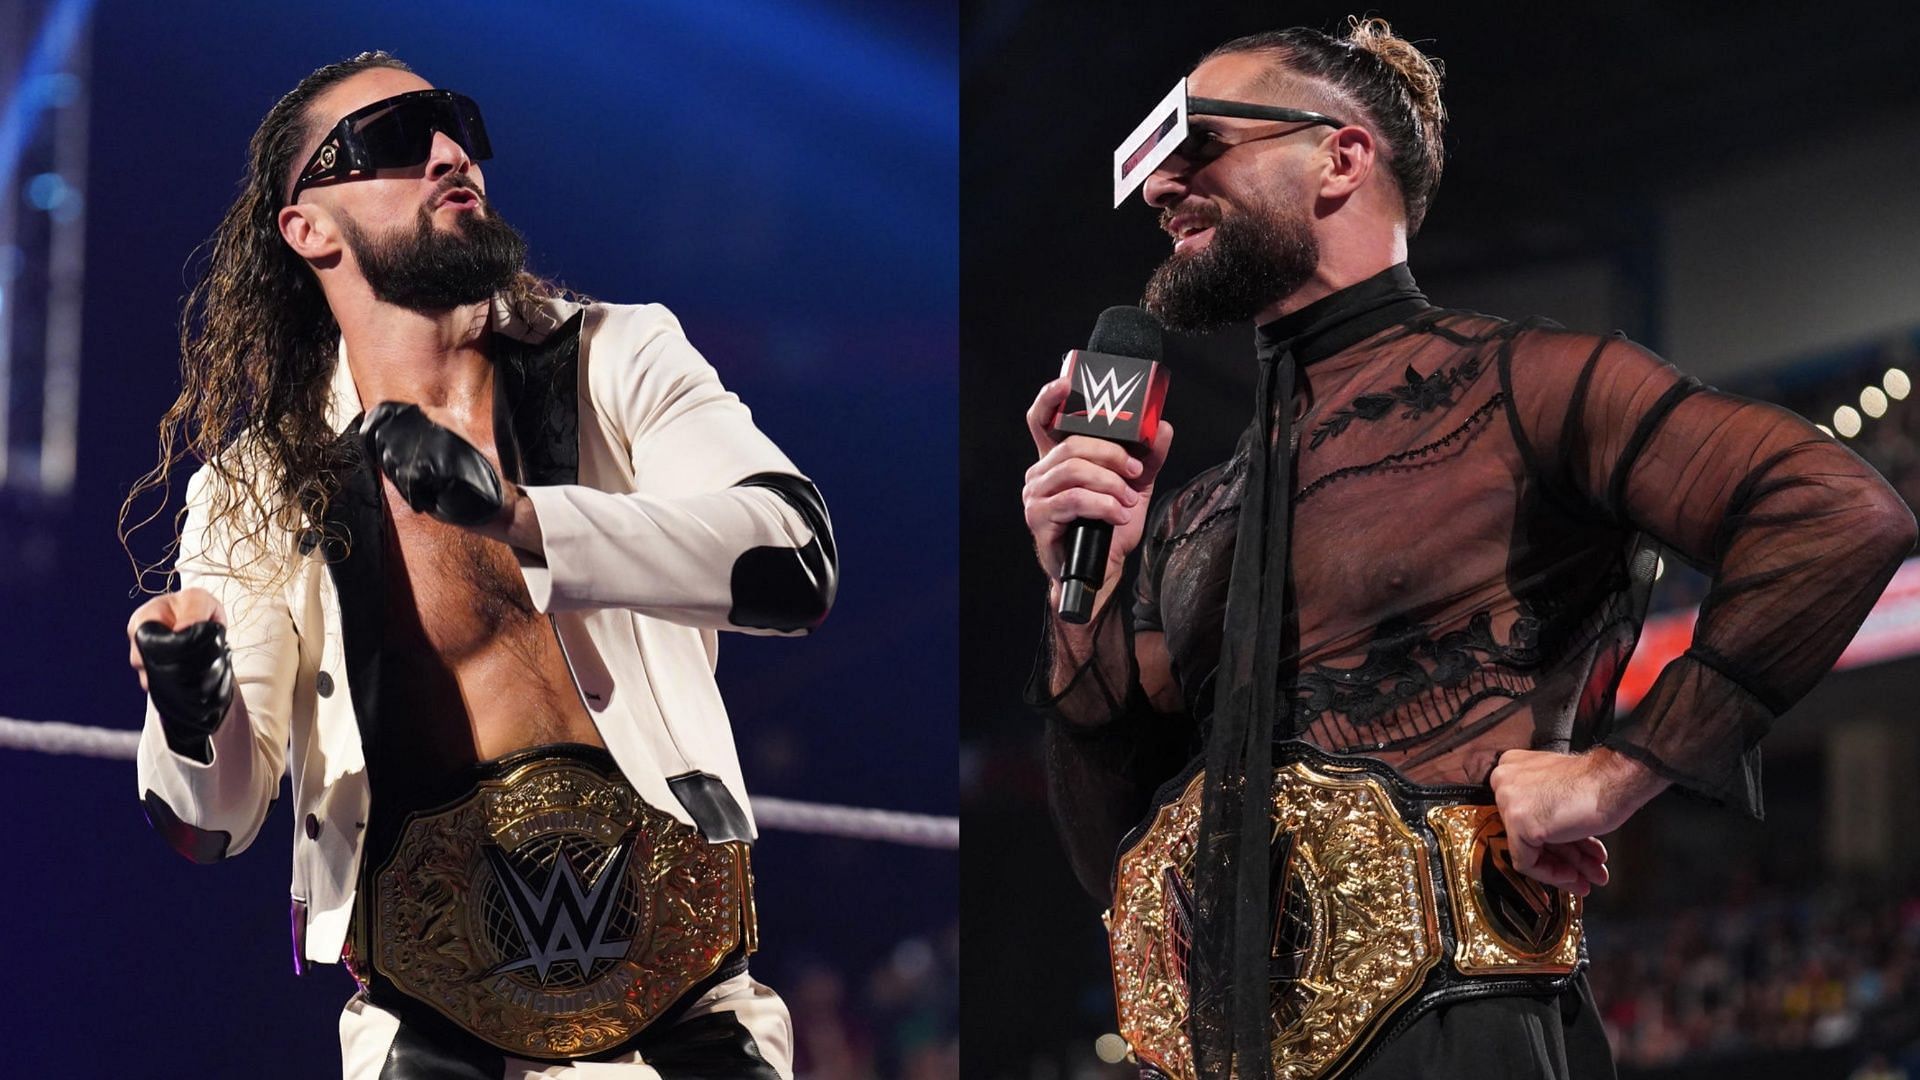 Seth Rollins is the World Heavyweight Champion on WWE RAW.